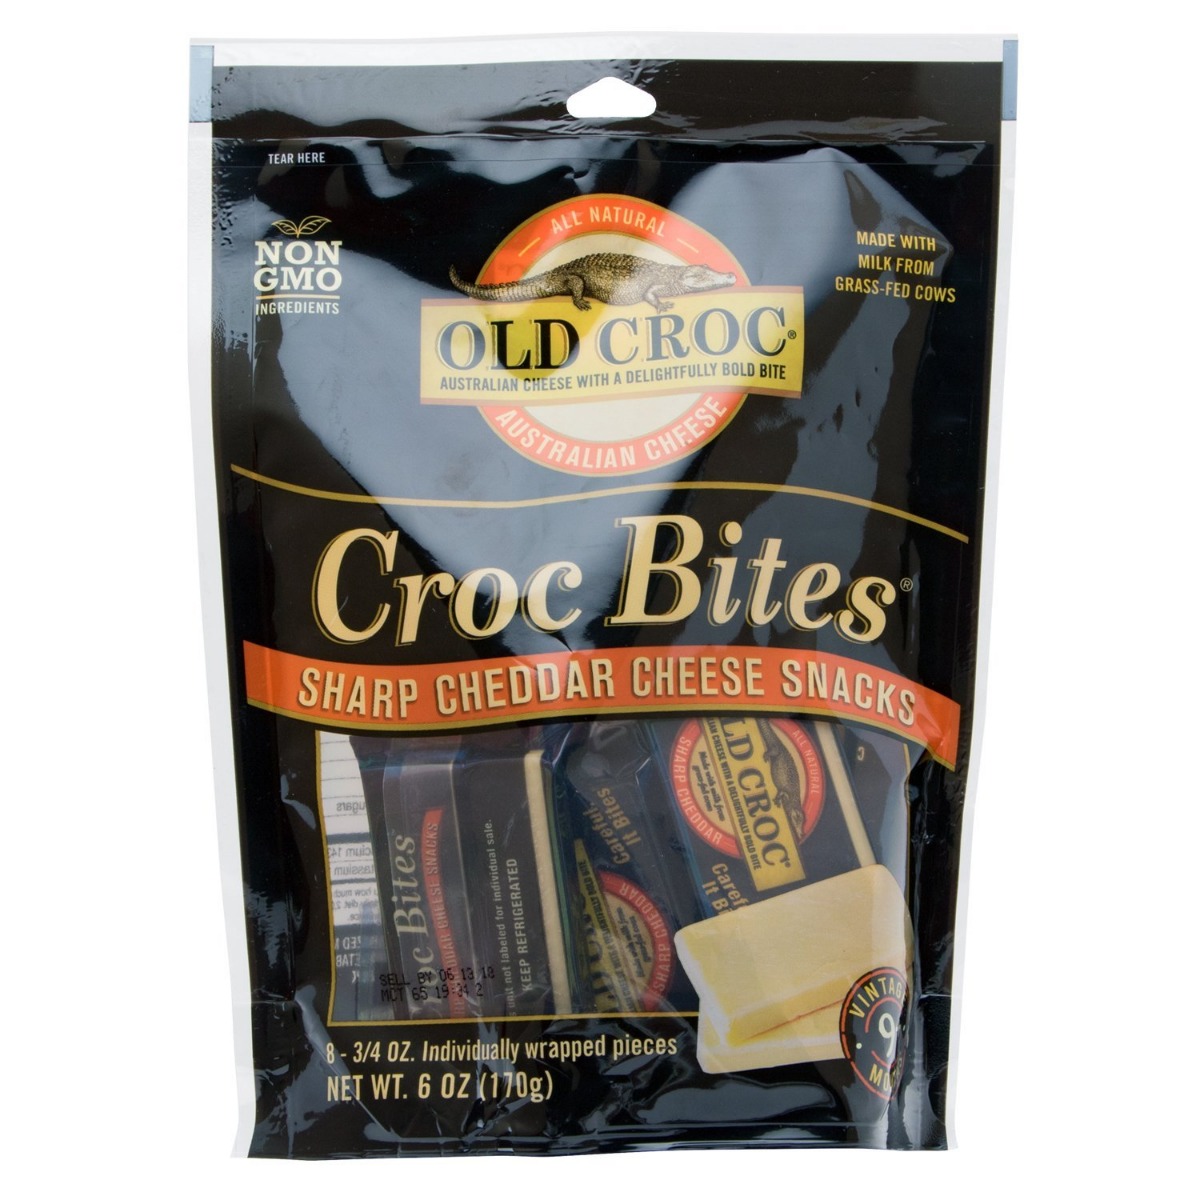 Croc Bites Sharp Cheddar Cheese Snacks - 891613000361